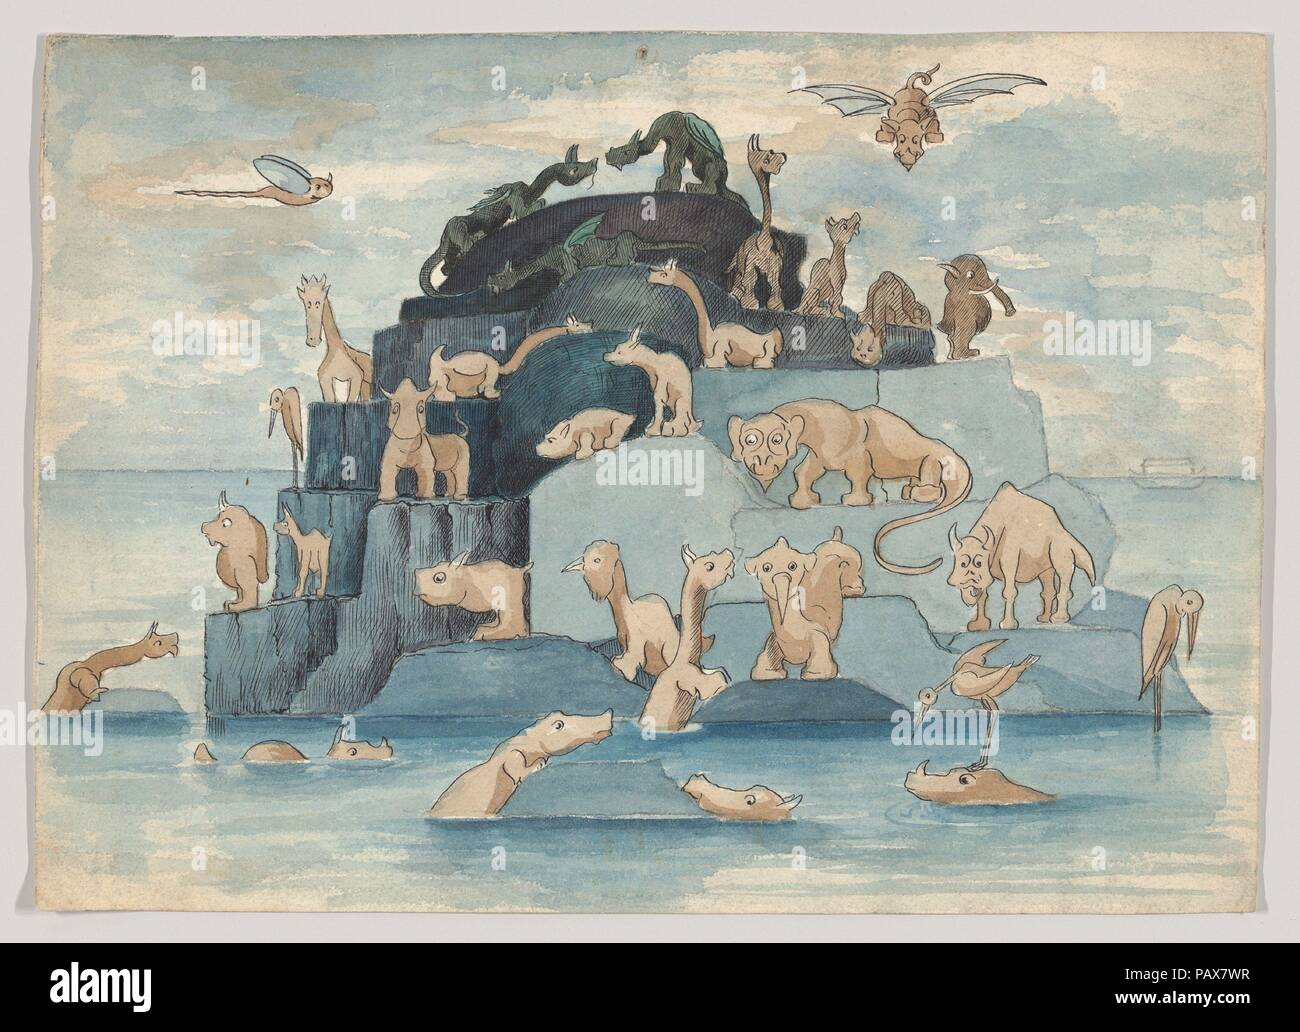 Fantastic Animals Left off the Ark. Artist: Herbert E. Crowley (British, London 1873-1939 Zurich). Dimensions: Sheet: 8 3/4 × 12 3/16 in. (22.2 × 31 cm). Date: 1911-24. Museum: Metropolitan Museum of Art, New York, USA. Stock Photo